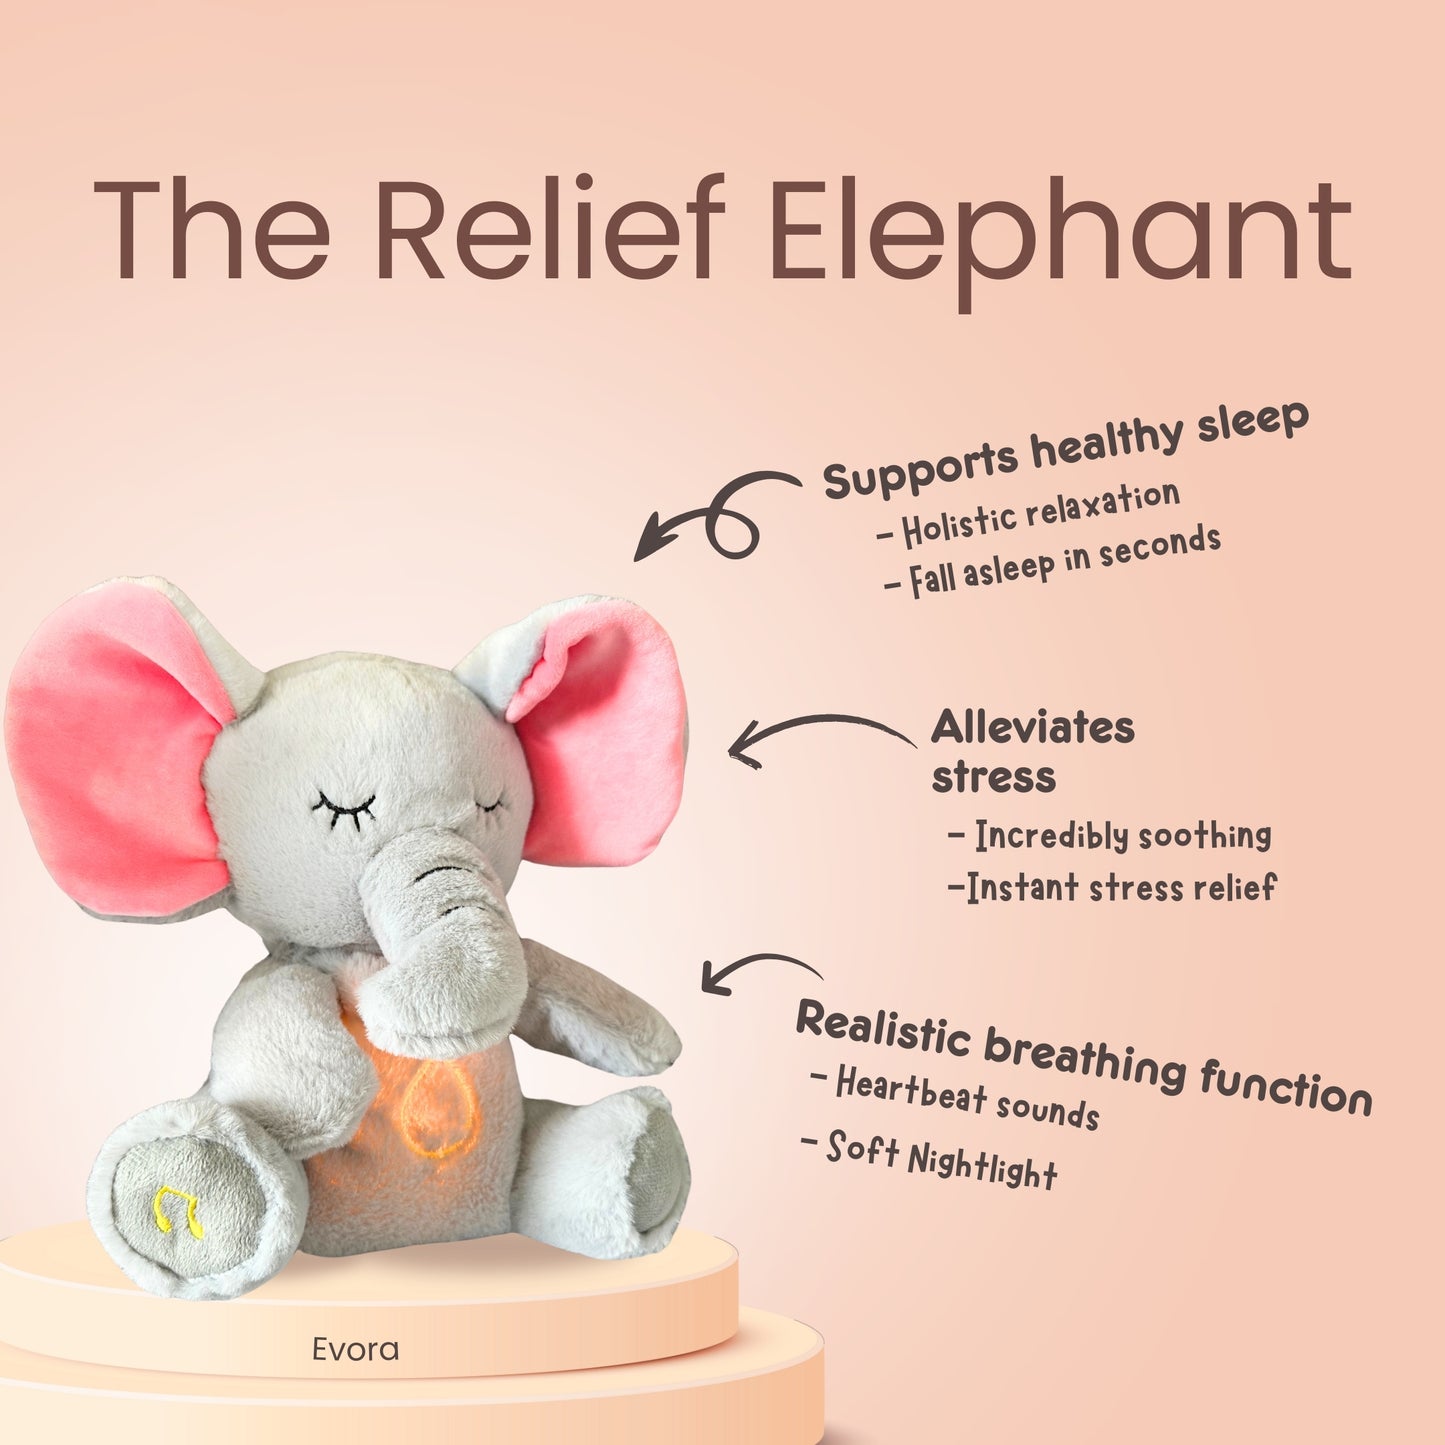 THE RELIEF ELEPHANT™